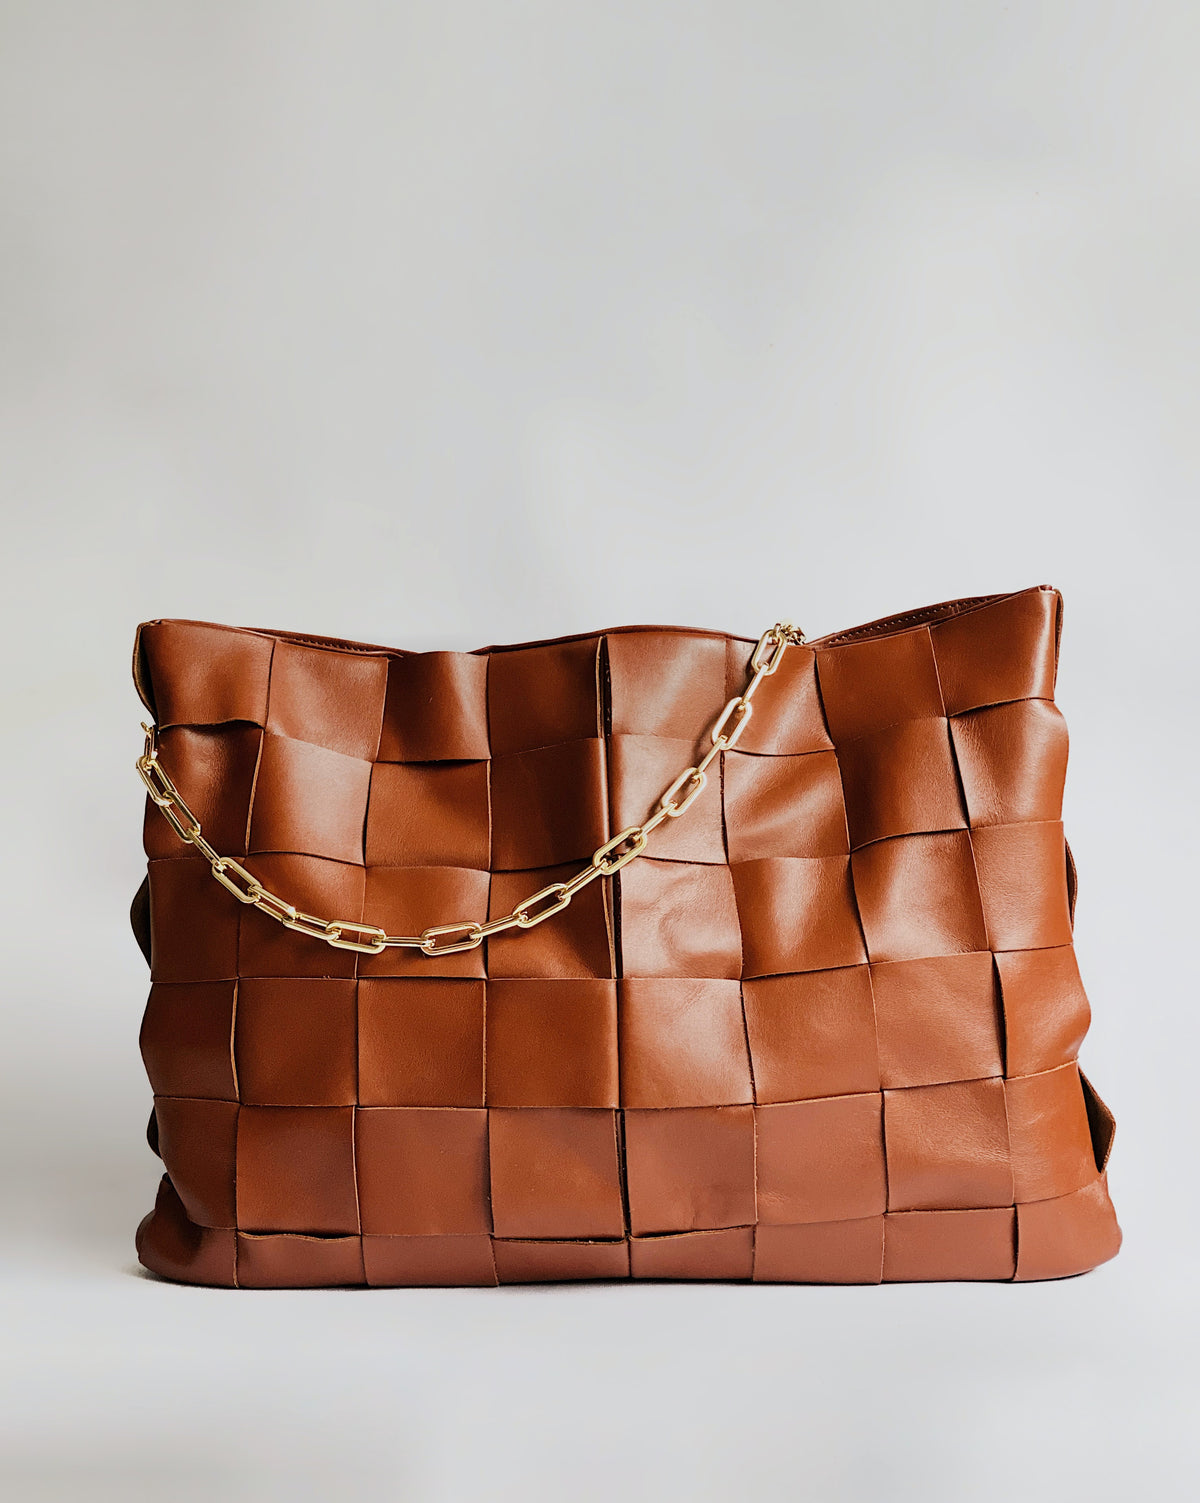 Affordable luxury handbag for women, luxury designer bag Le Sac